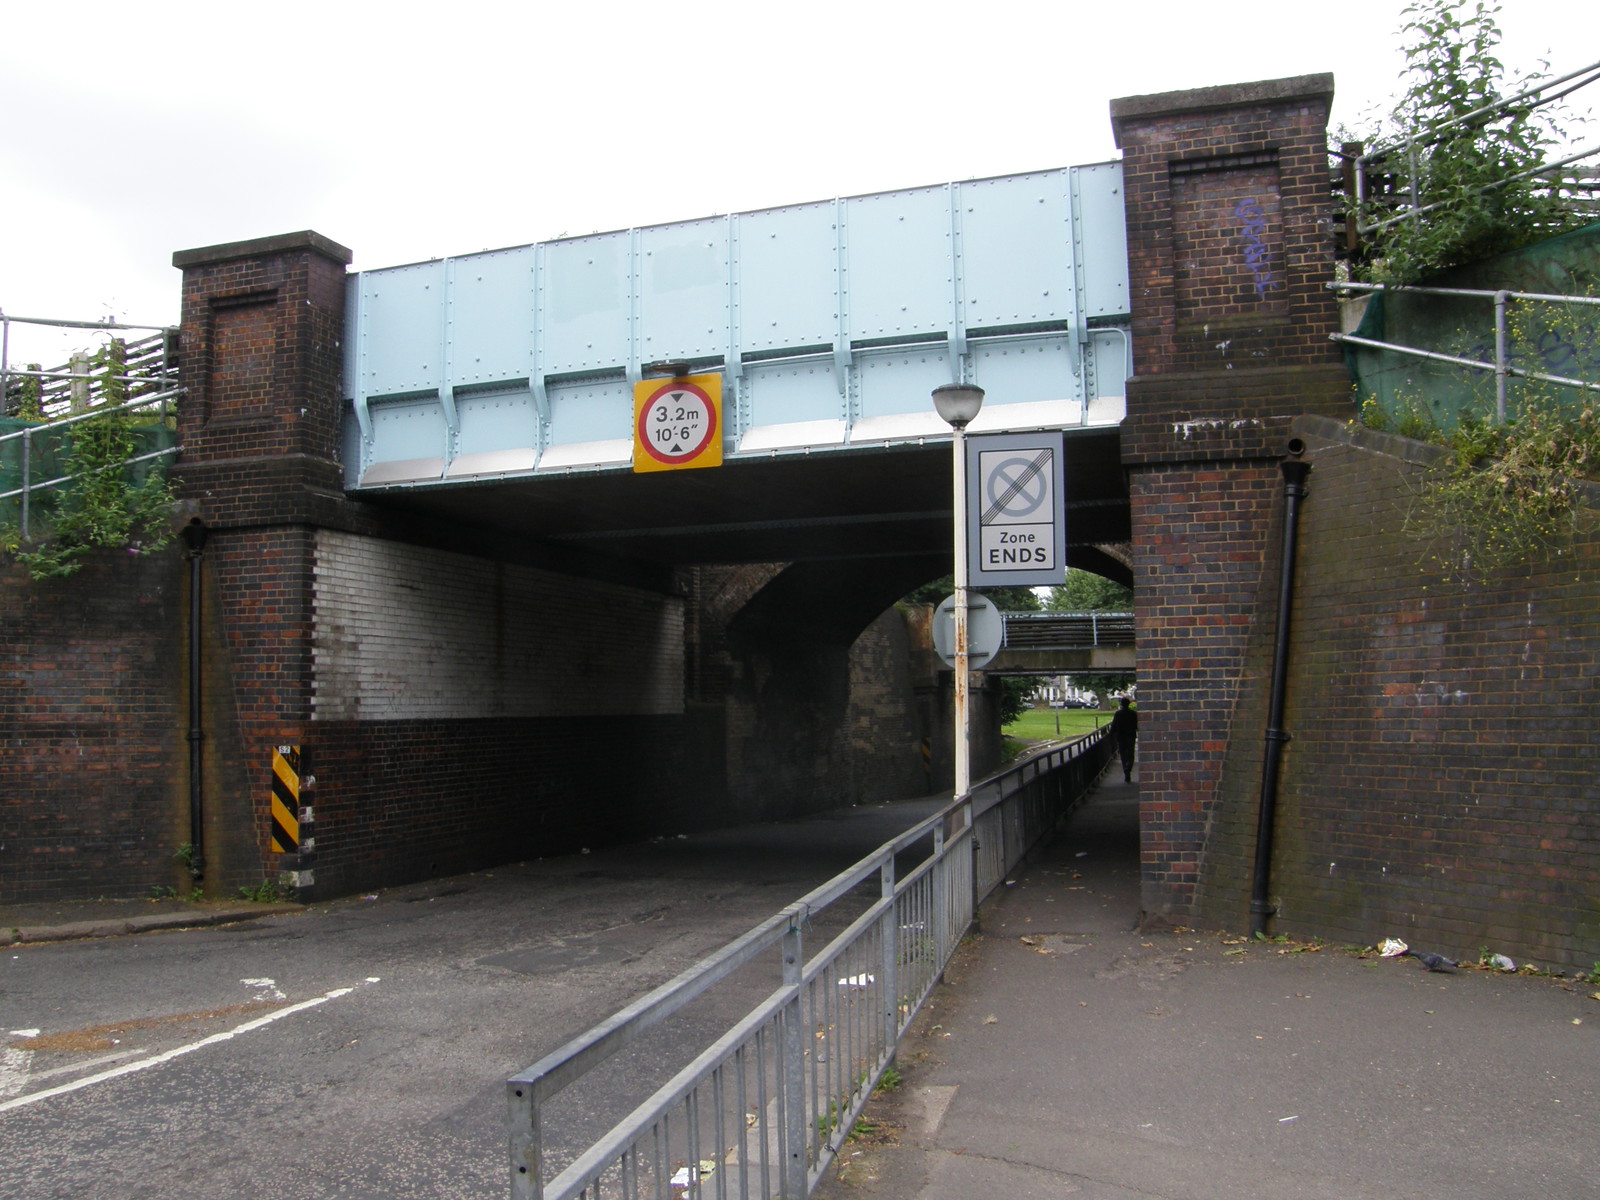 The three bridges over Fisher's Lane